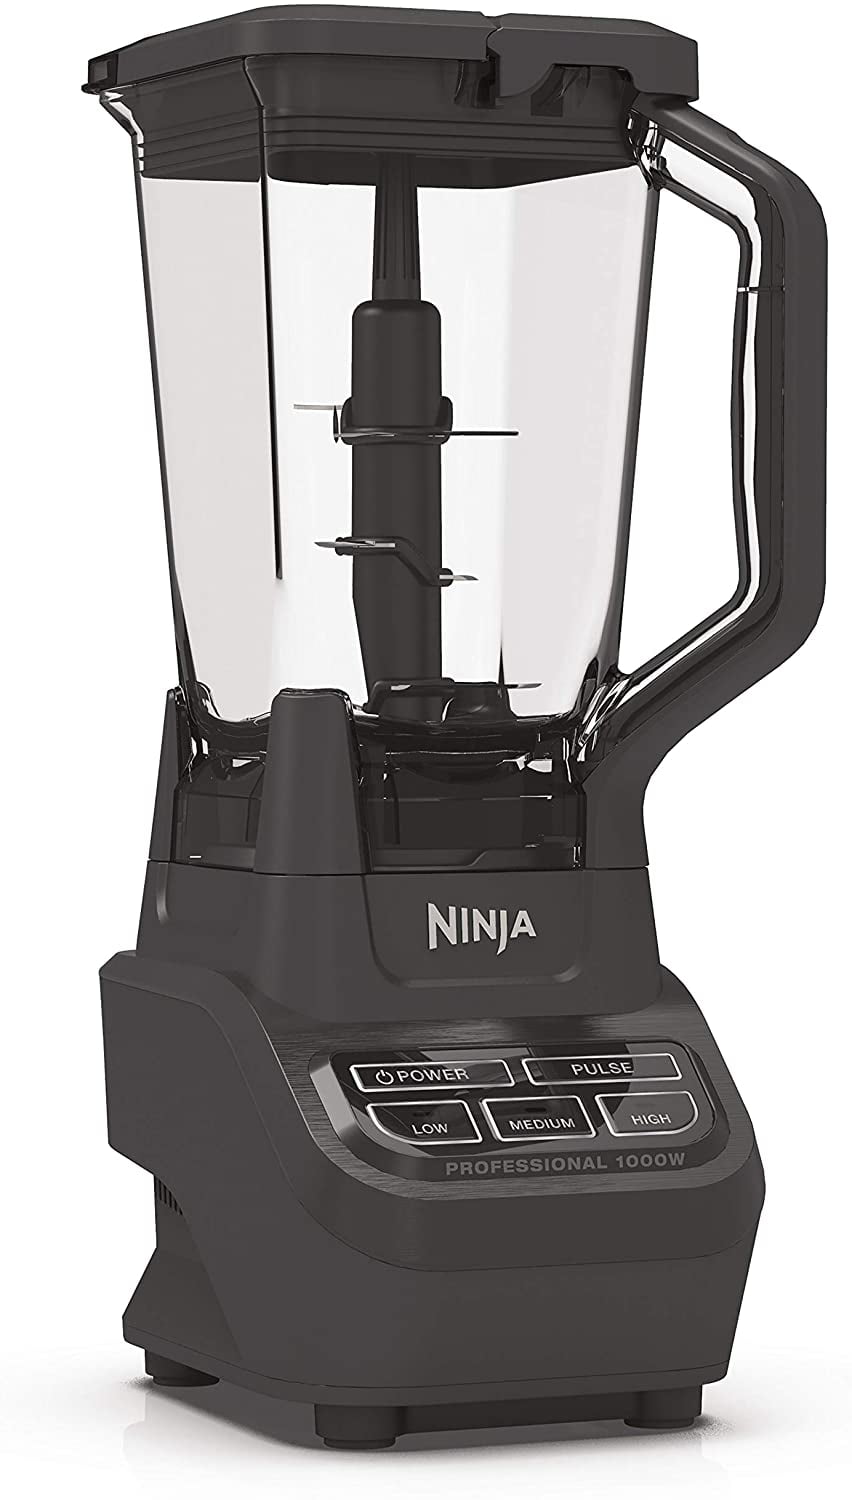 Ninja 1000W Professional Blender - Black 622356556897